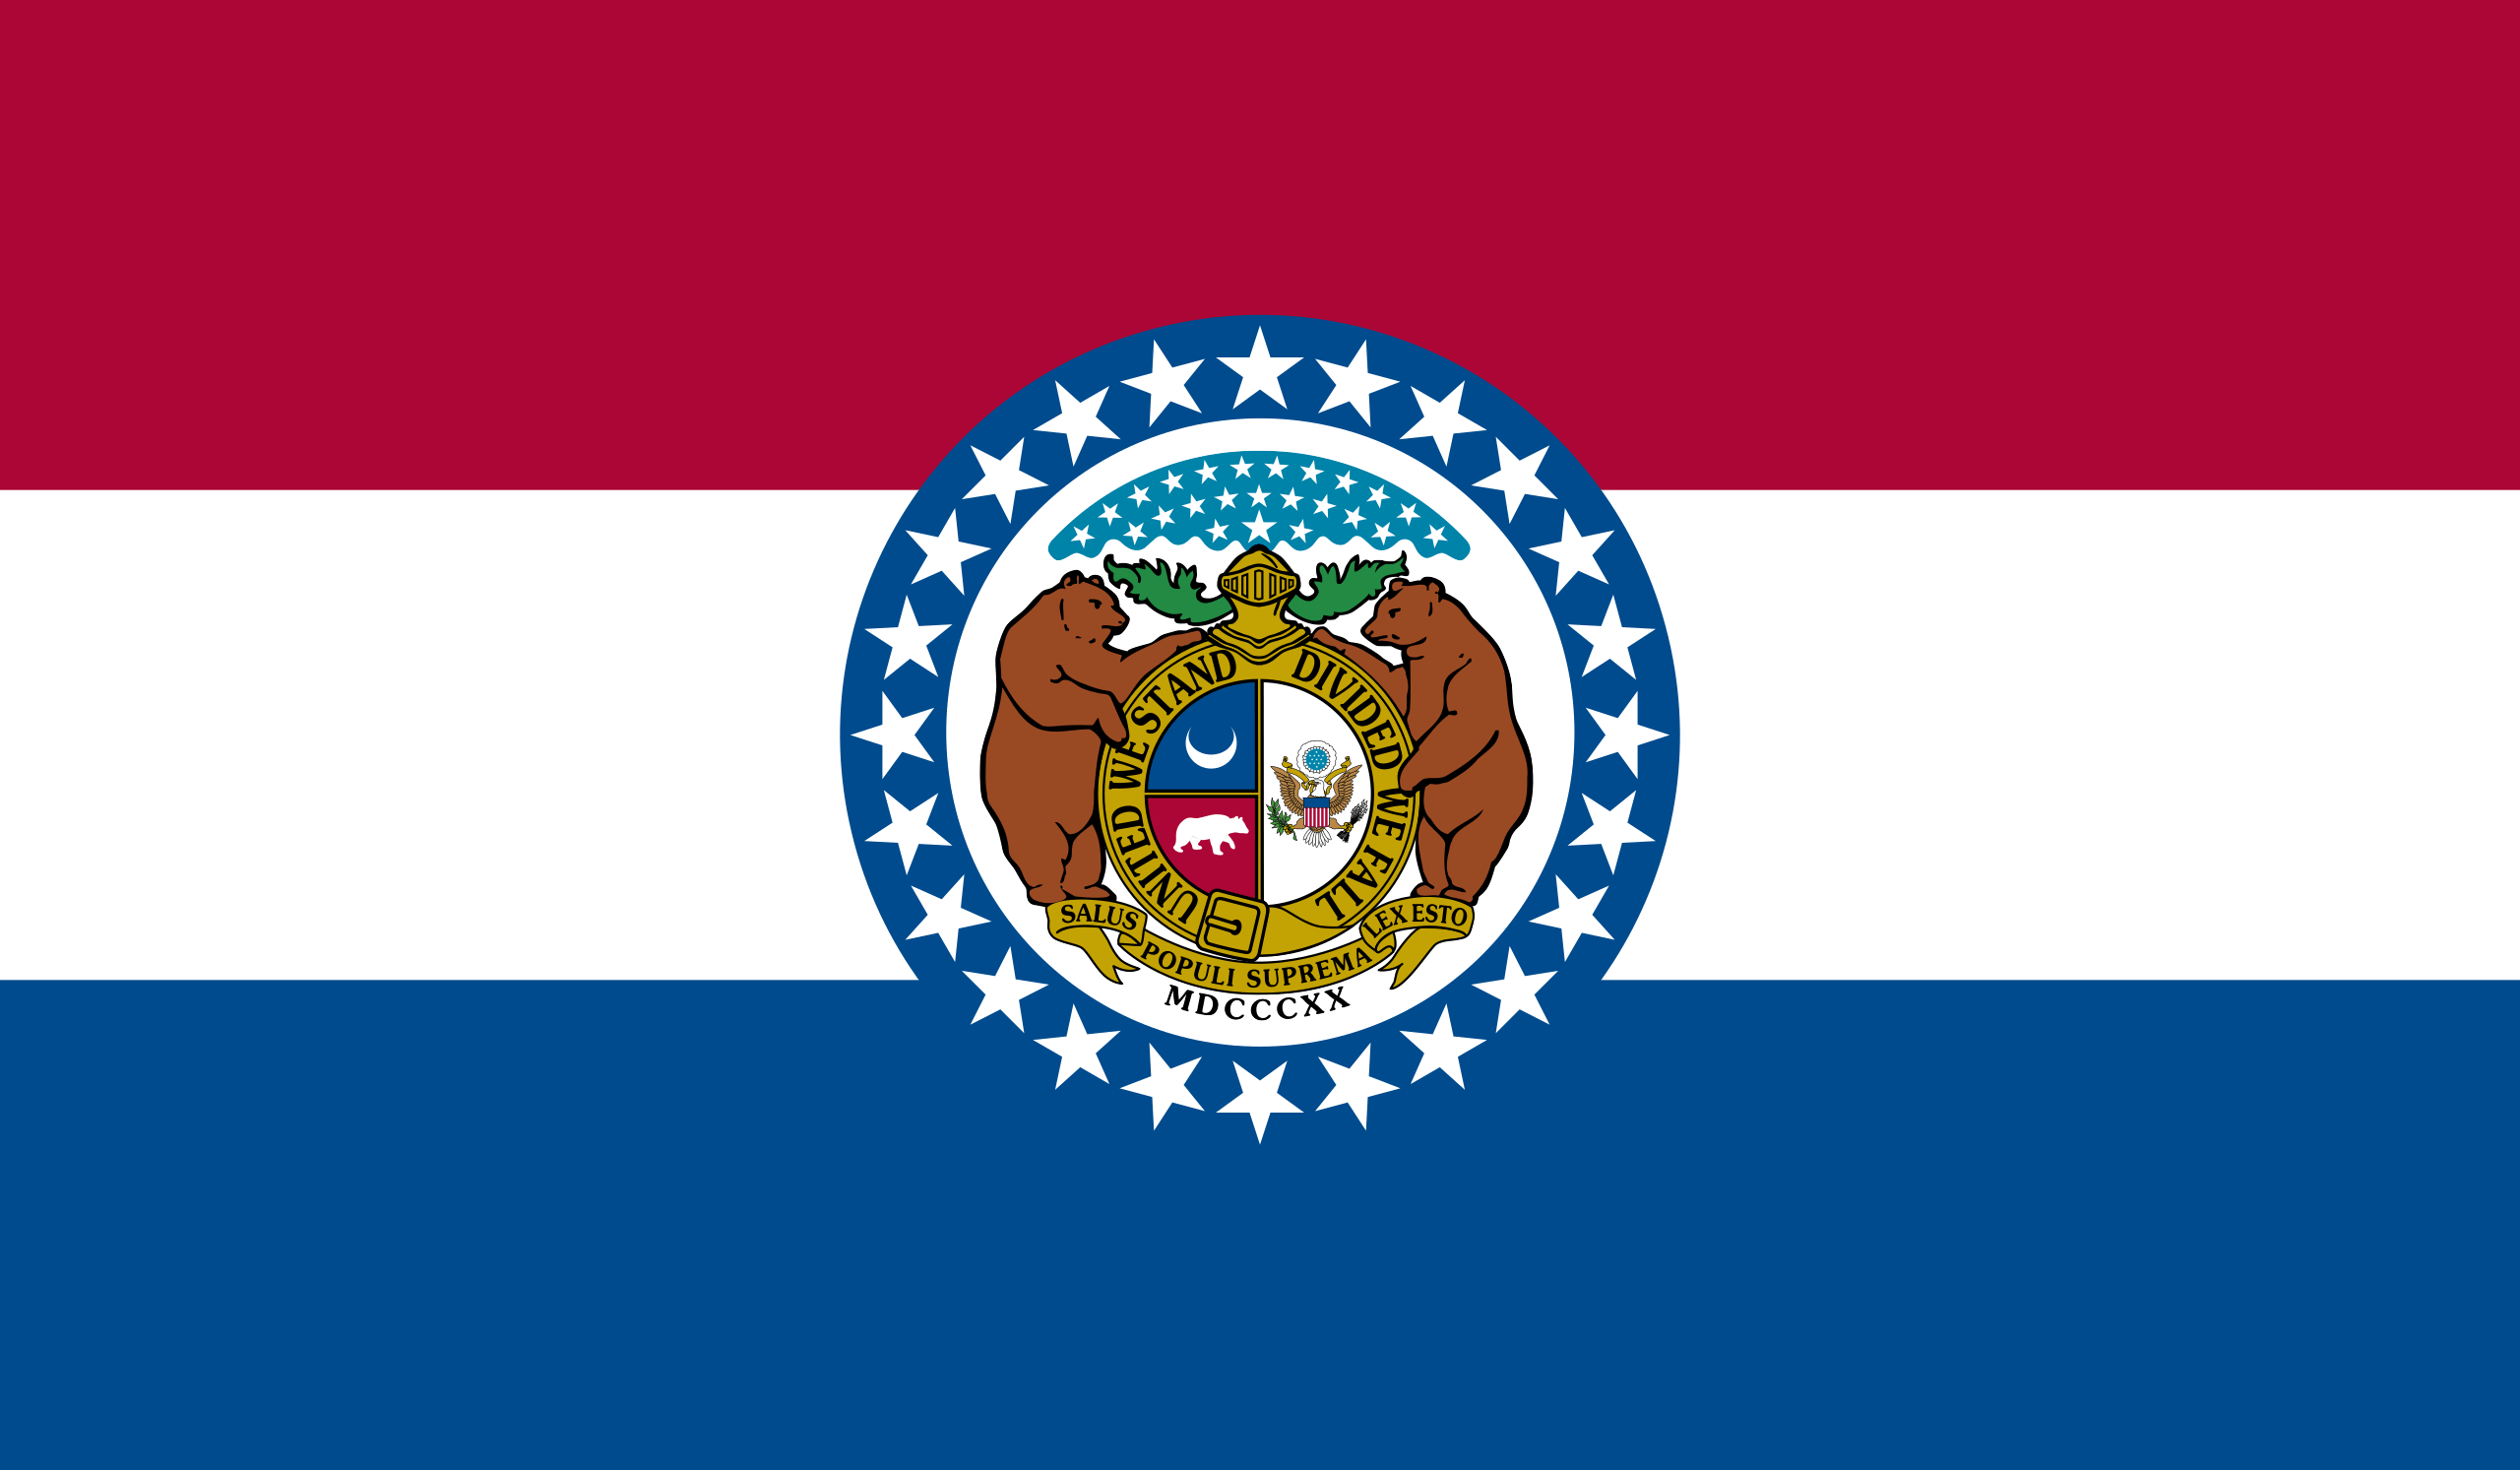 the Missouri State Flag